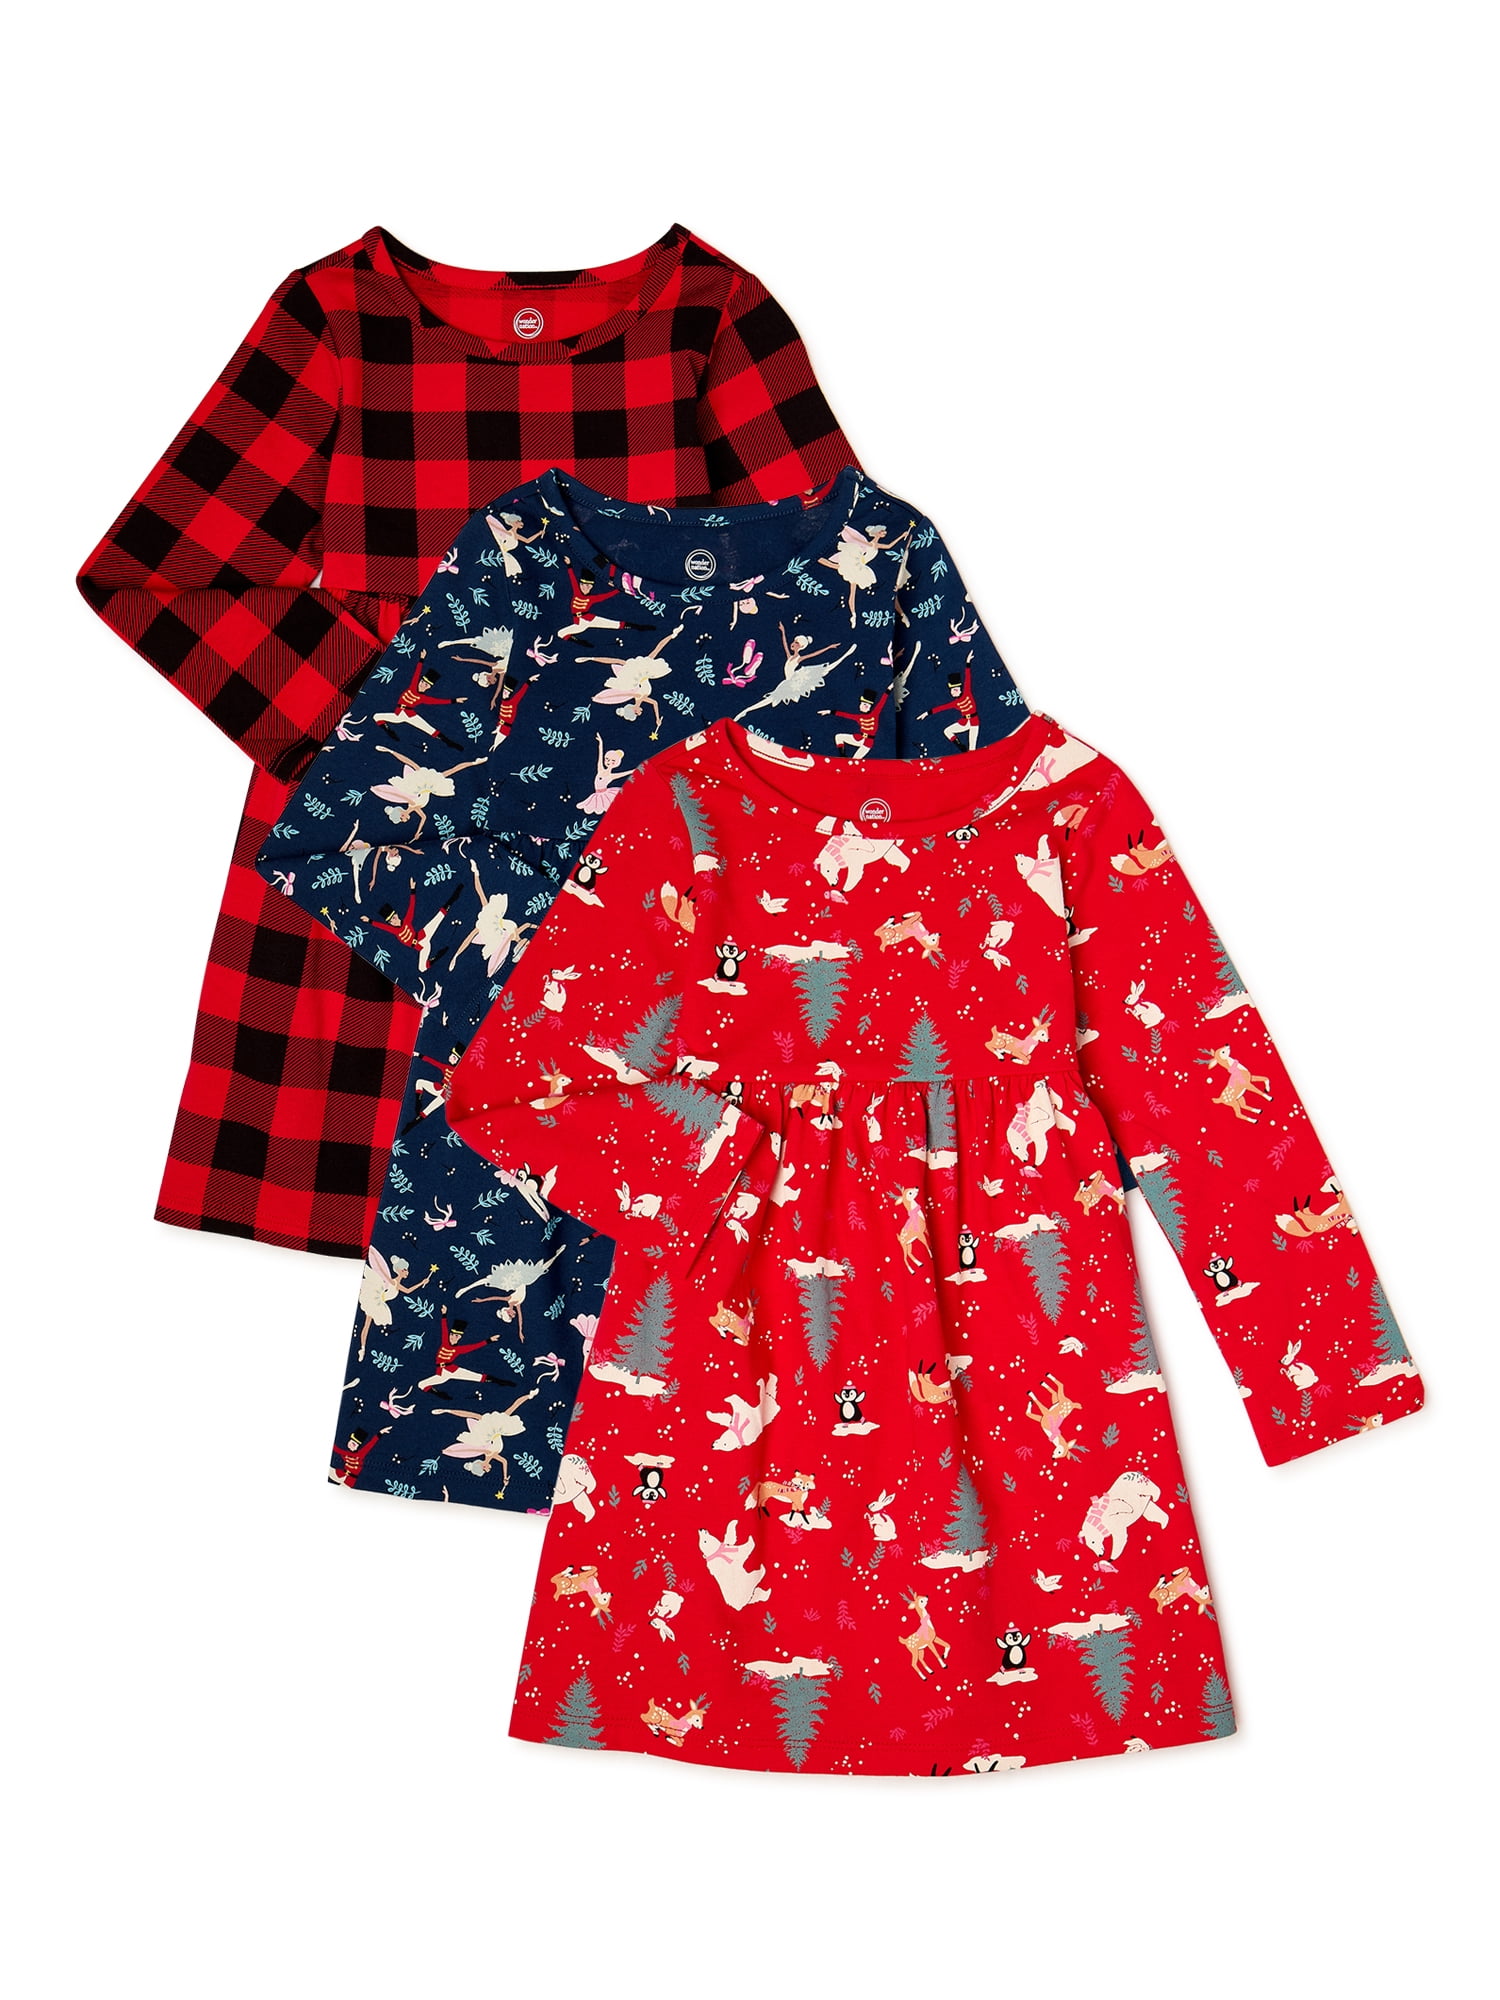 Boy's Christmas Boutique Striped RV Top Christmas Camping Tartan Plaid & Stripe RV T-Shirt Toddler Sizes 12 18 Months 2T 3T 4T 5 6 7 8